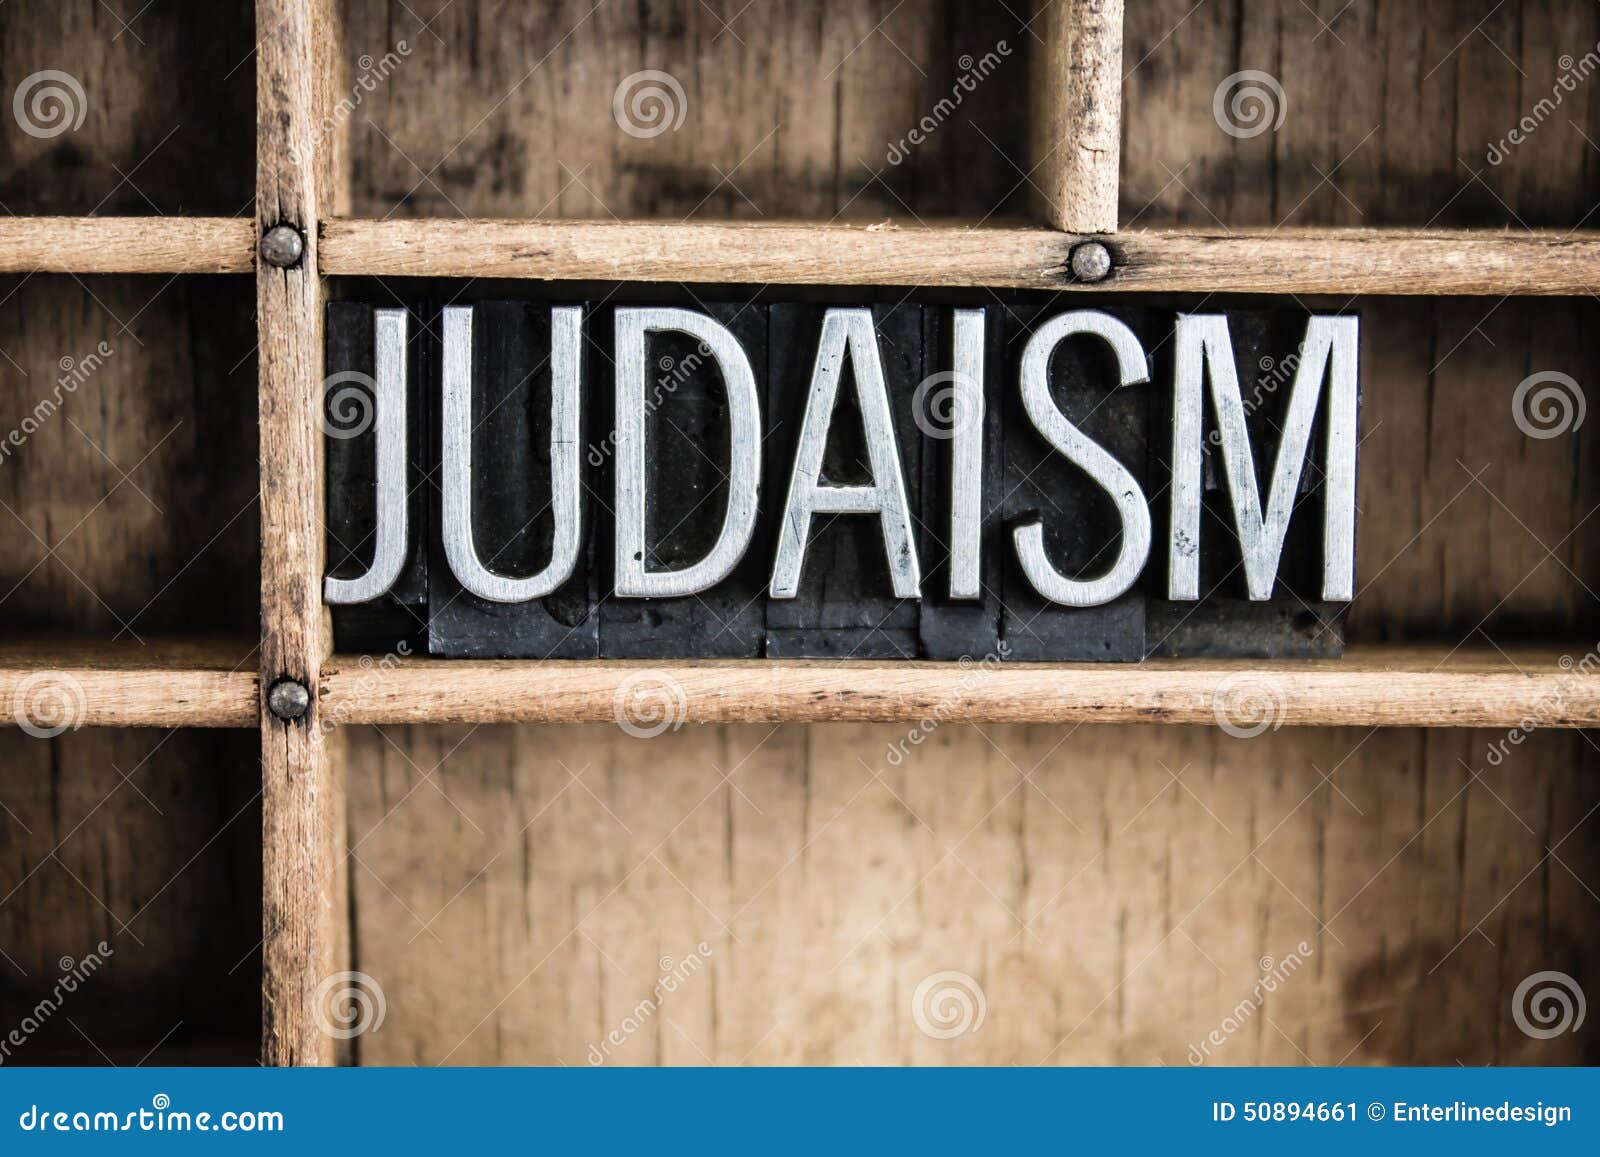 judaism concept metal letterpress word in drawer